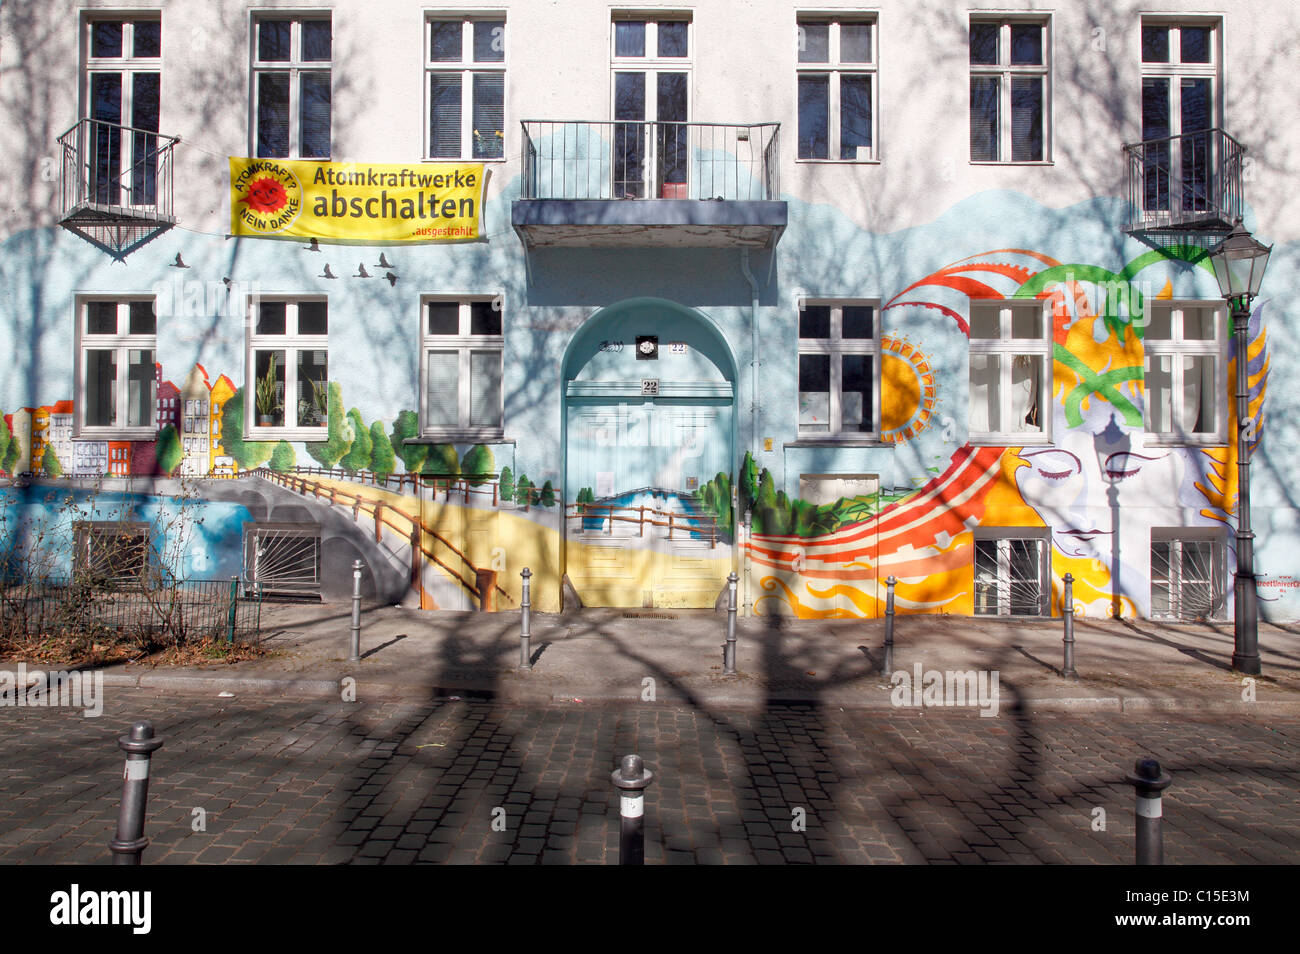 Bemalte Fassade am Fraenkelufer, Kreuzberg, Berlin, Deutschland Stockfoto